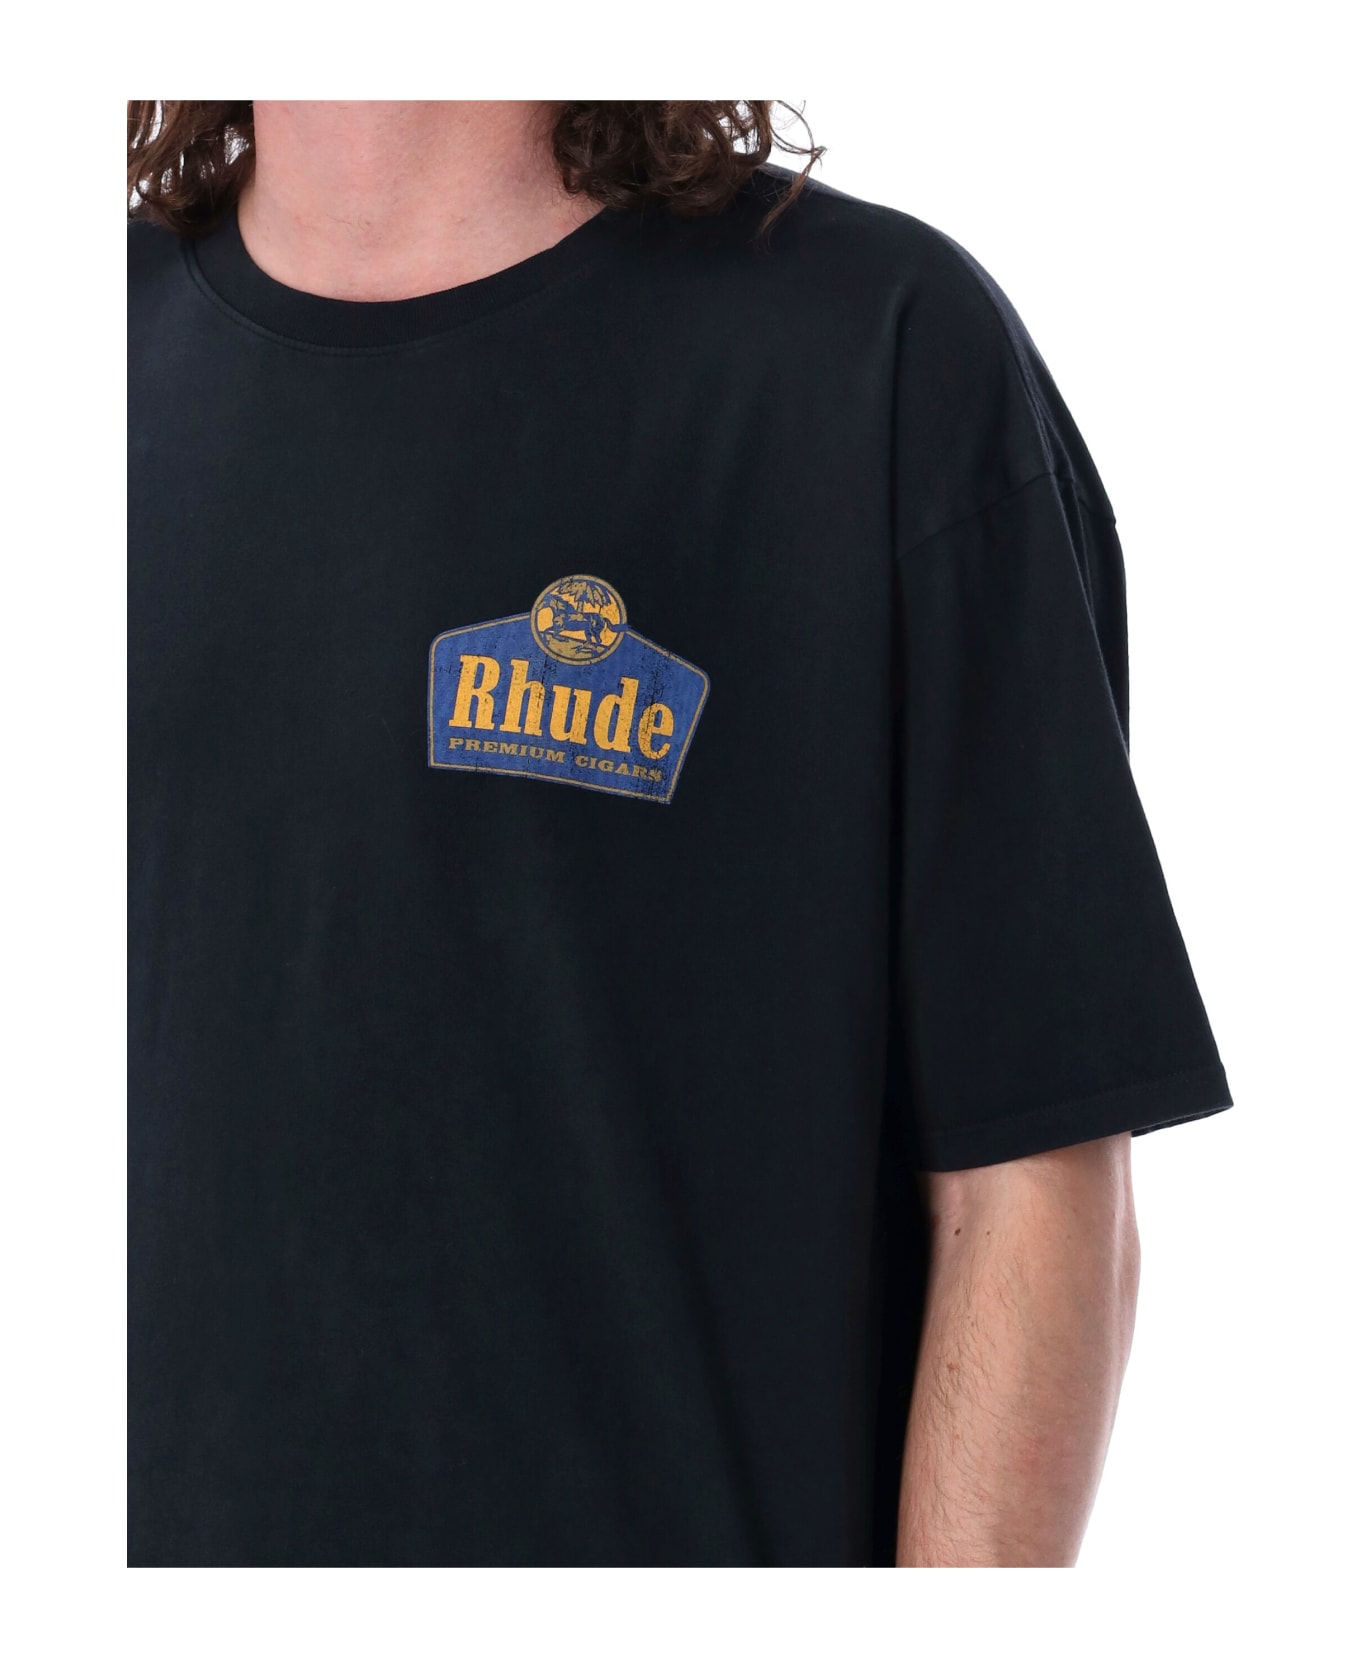 Rhude Gran Cru T-shirt - VINT BLACK